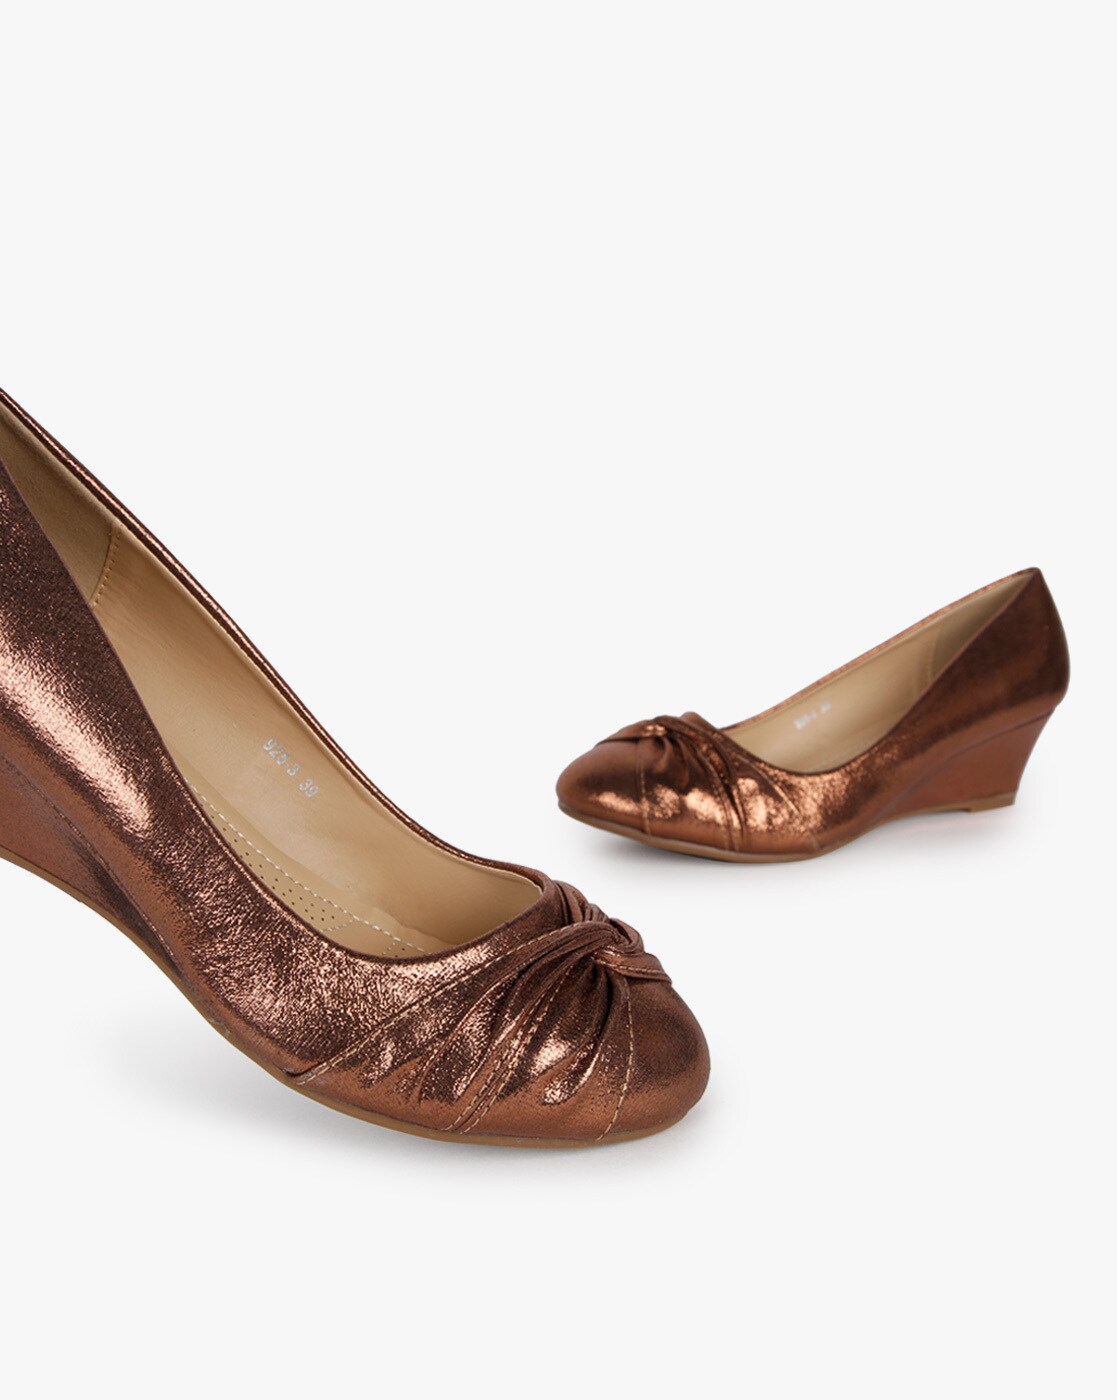 Buy Bronze-Toned Heeled Sandals for 